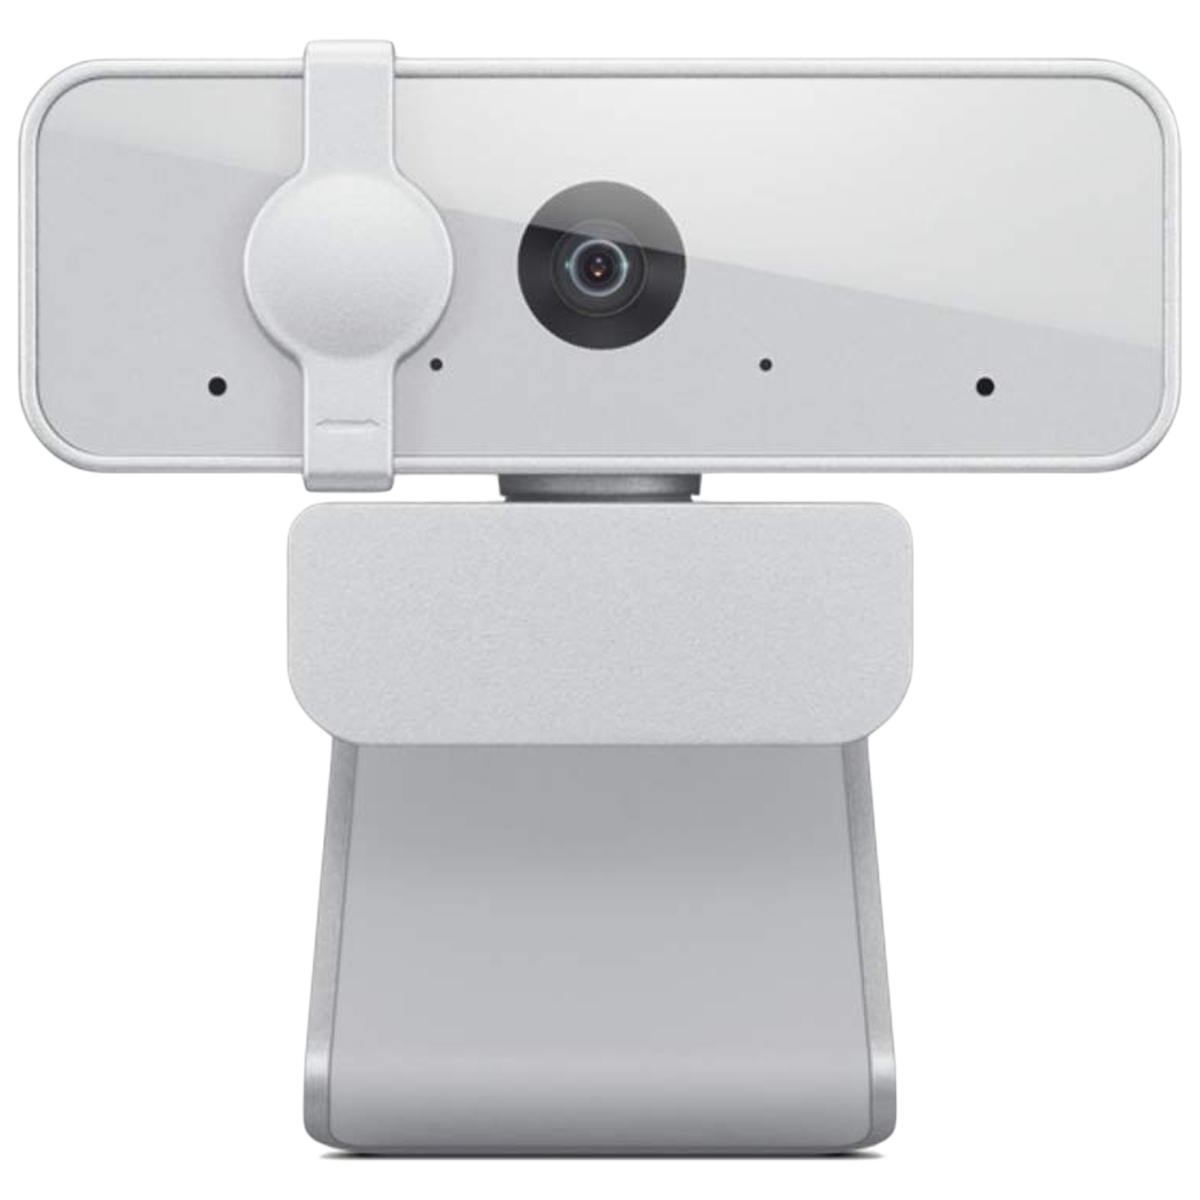 Lenovo 300 USB 2.1 MP Web Cam (Full HD Video Call, GXC1B34793, Cloud Grey)